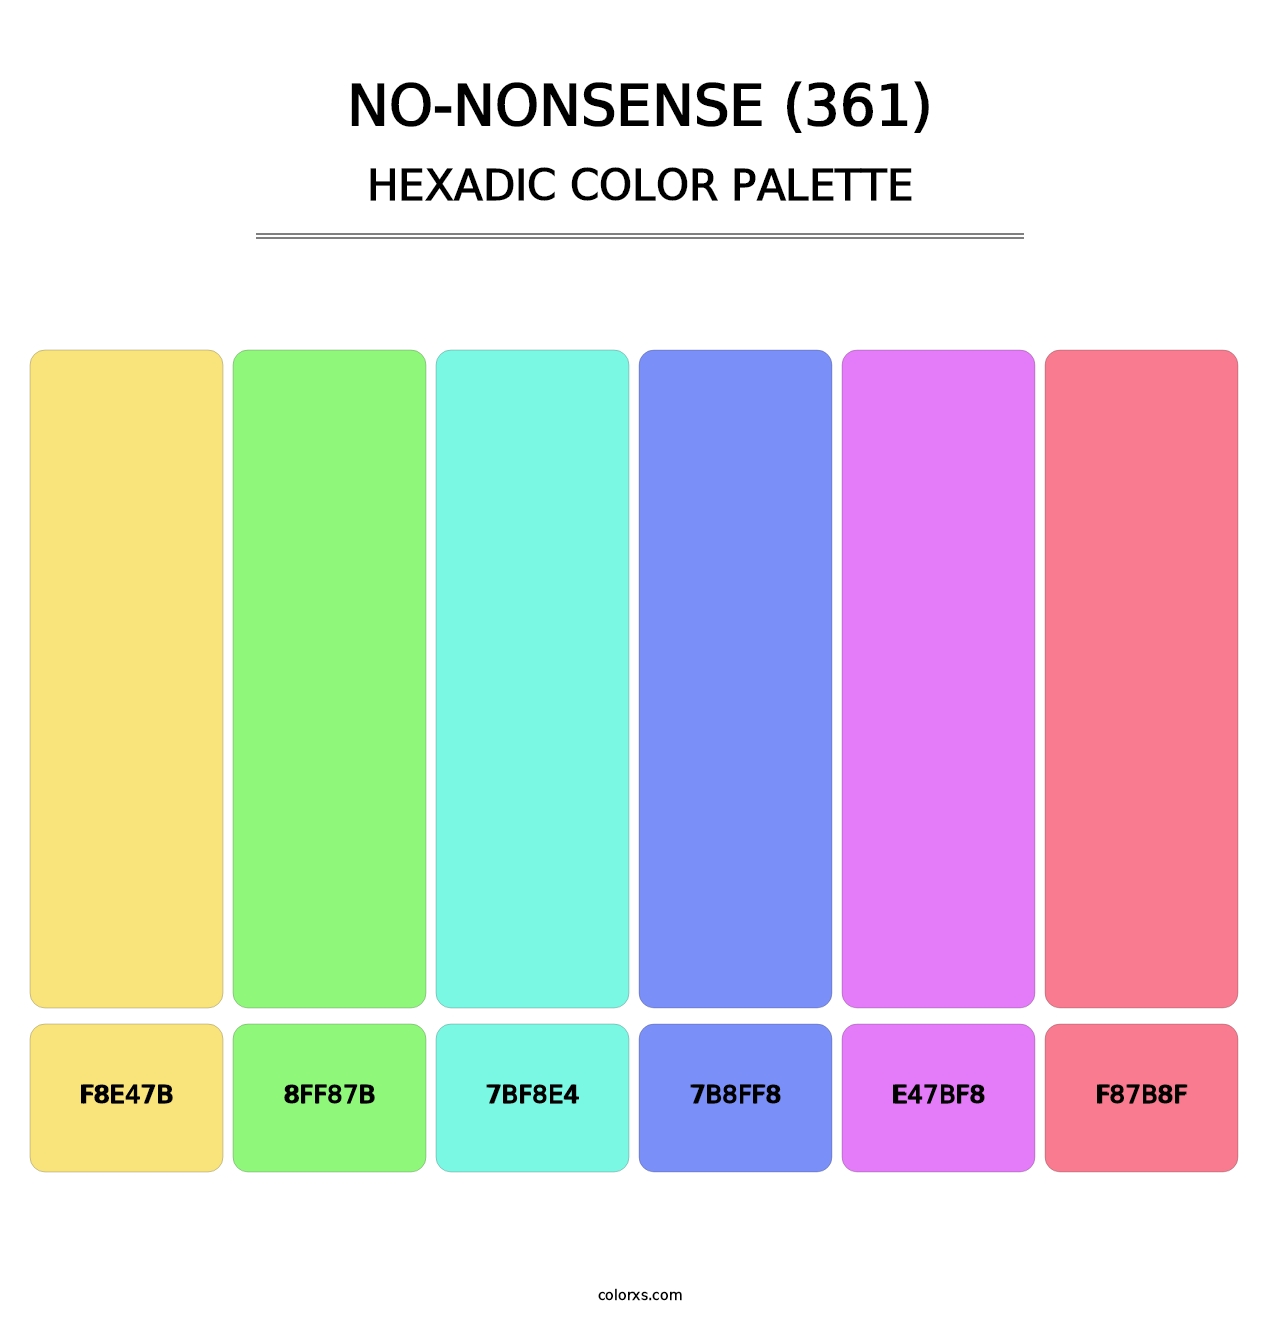 No-Nonsense (361) - Hexadic Color Palette